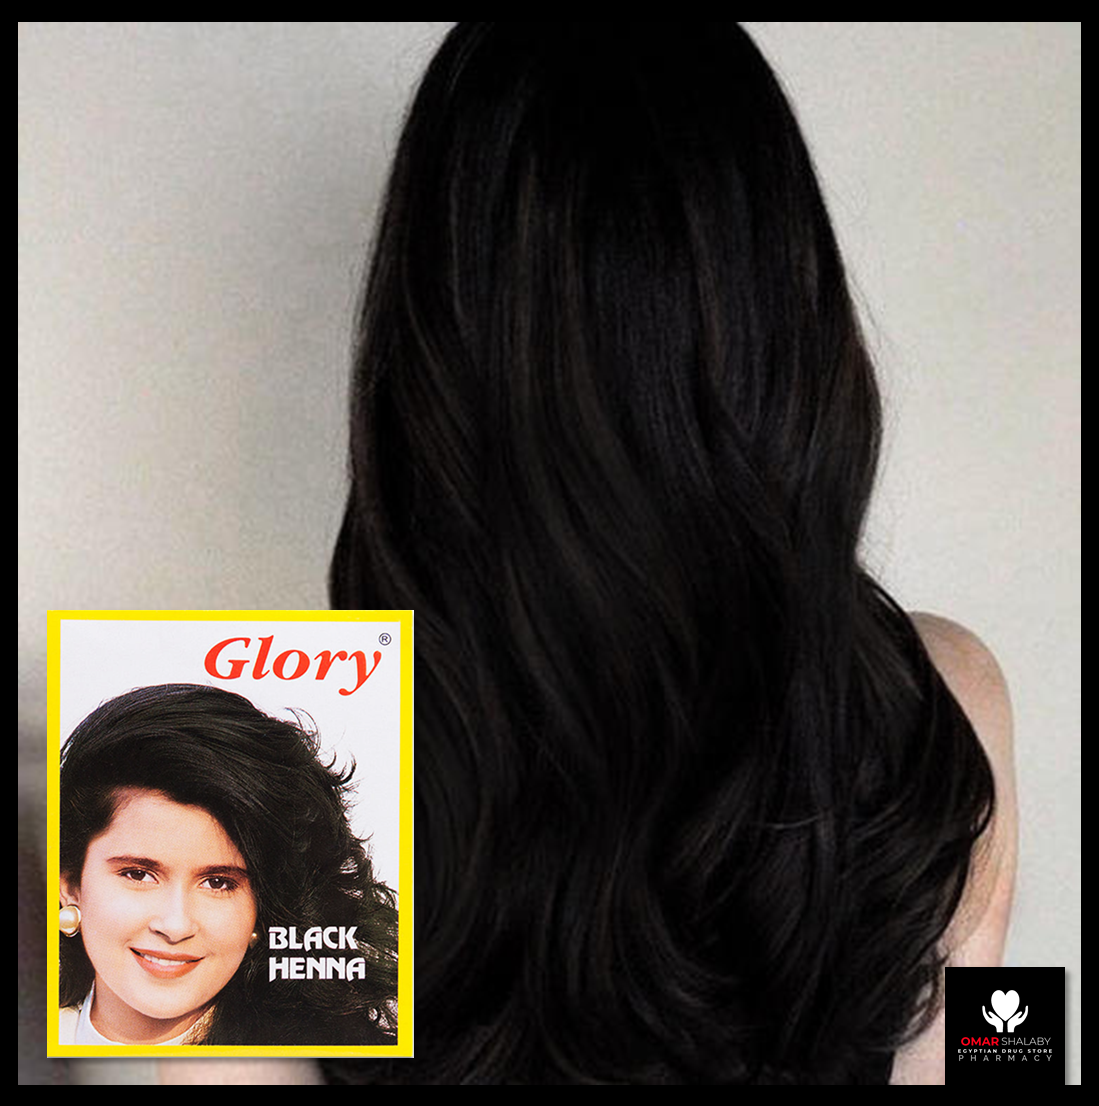 GLORY BLACK HENNA HAIR DYE 10 GM SACHET